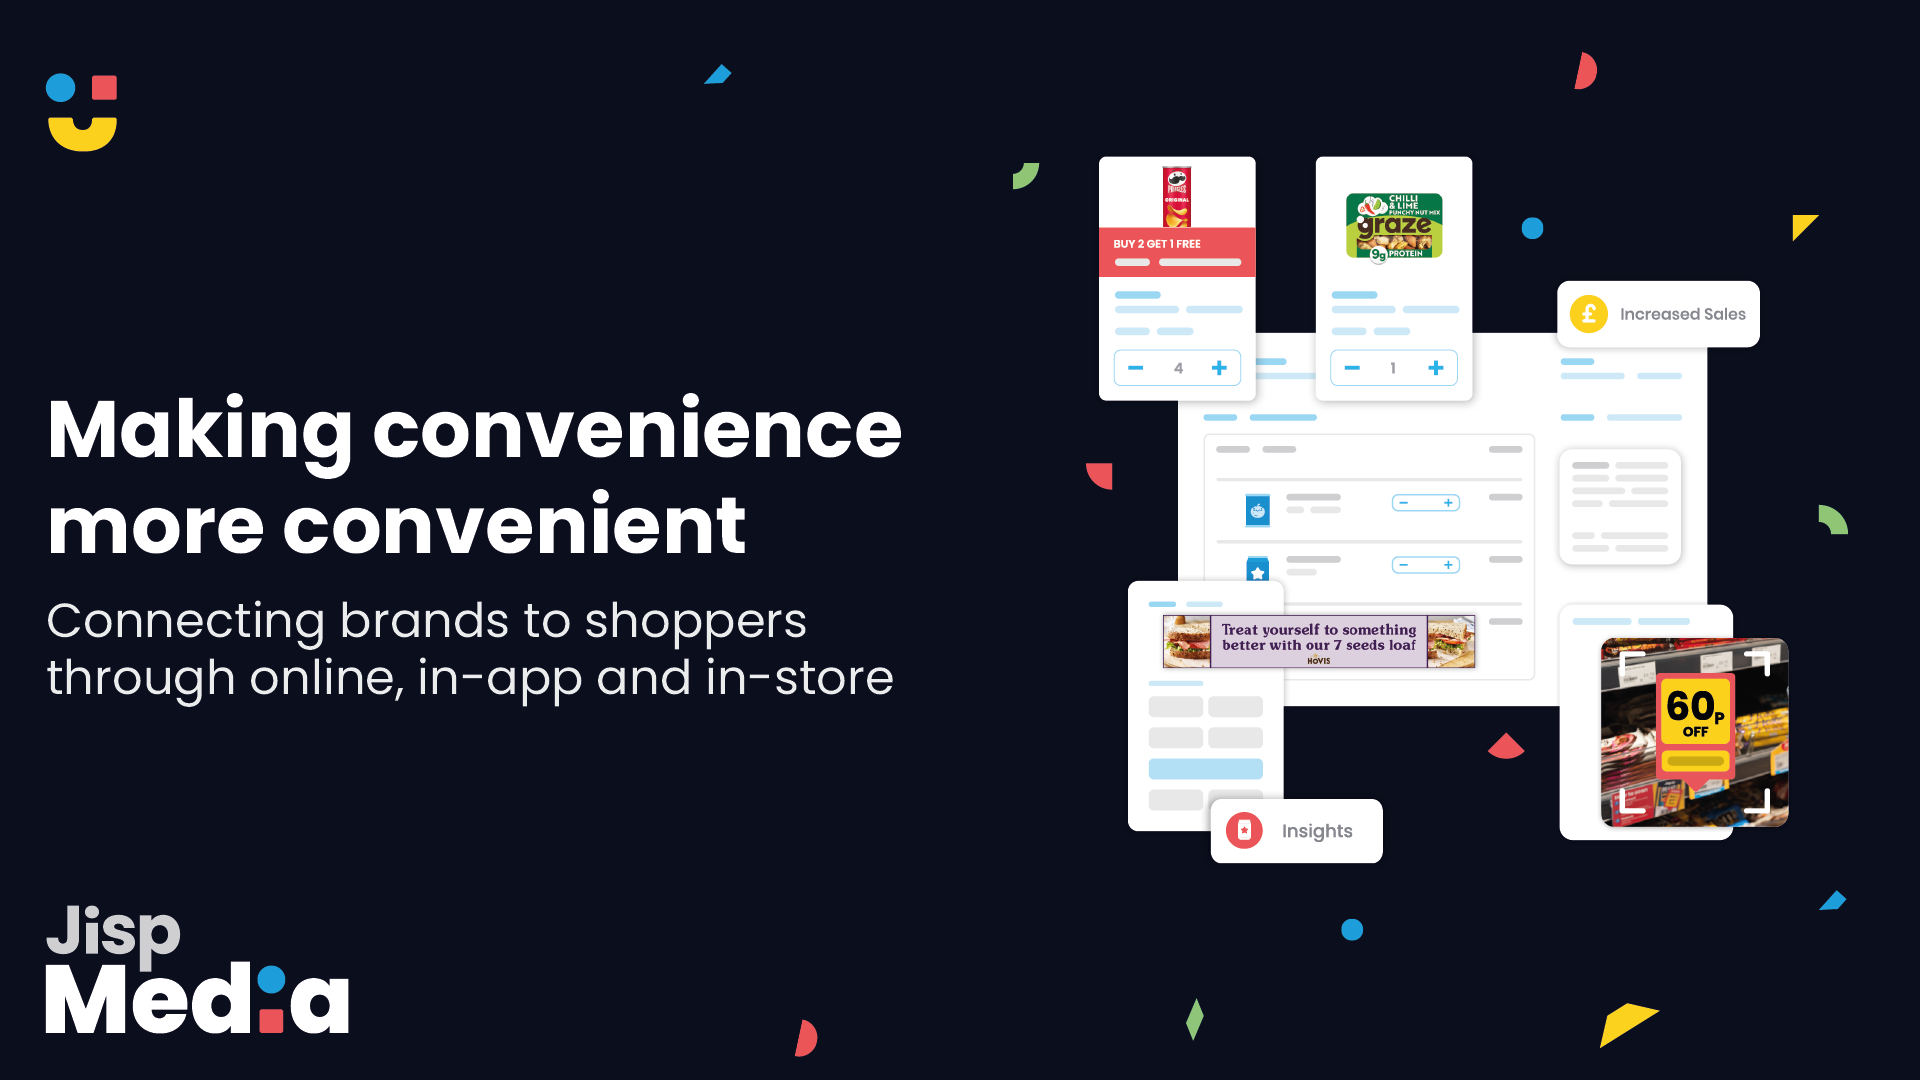 Jisp launches new platform to make convenience more convenient